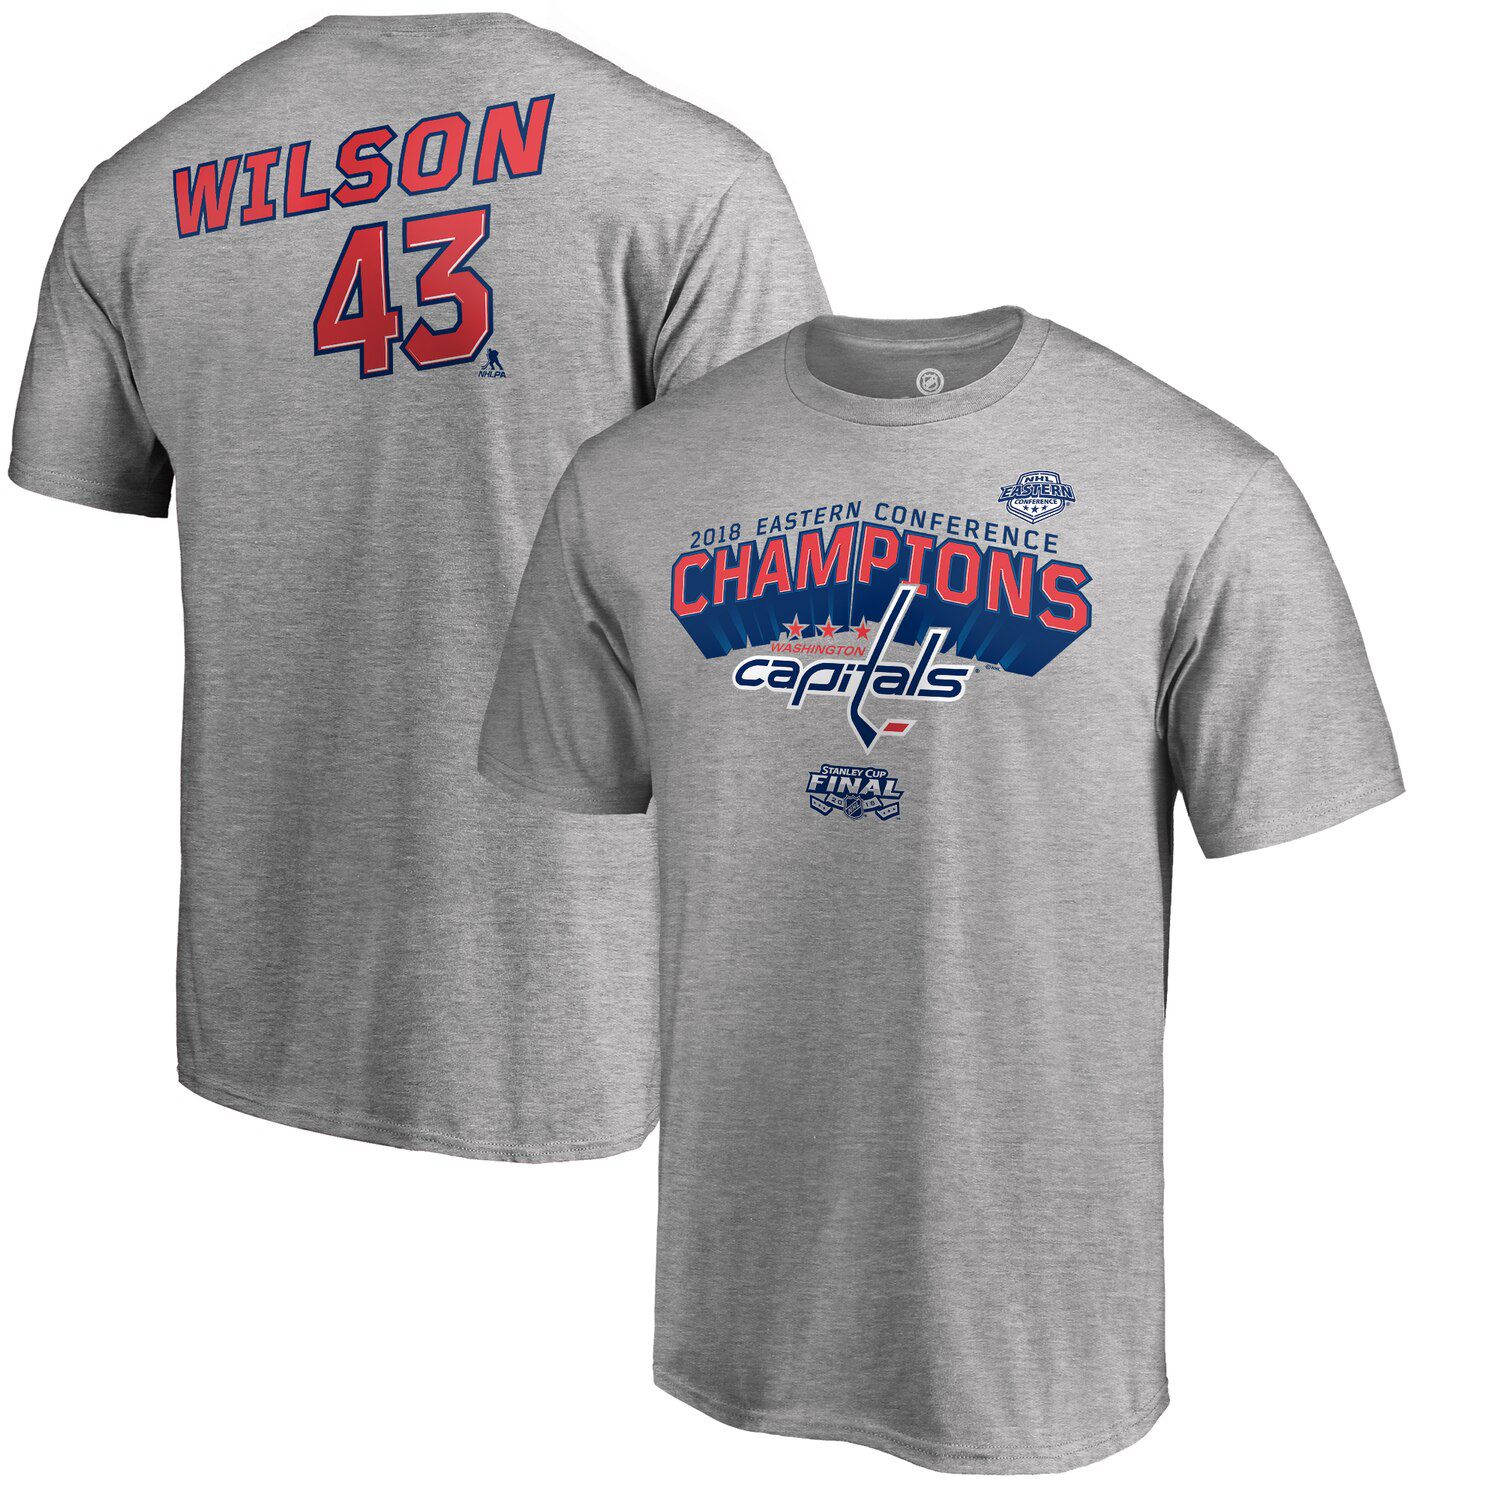 washington capitals championship shirt